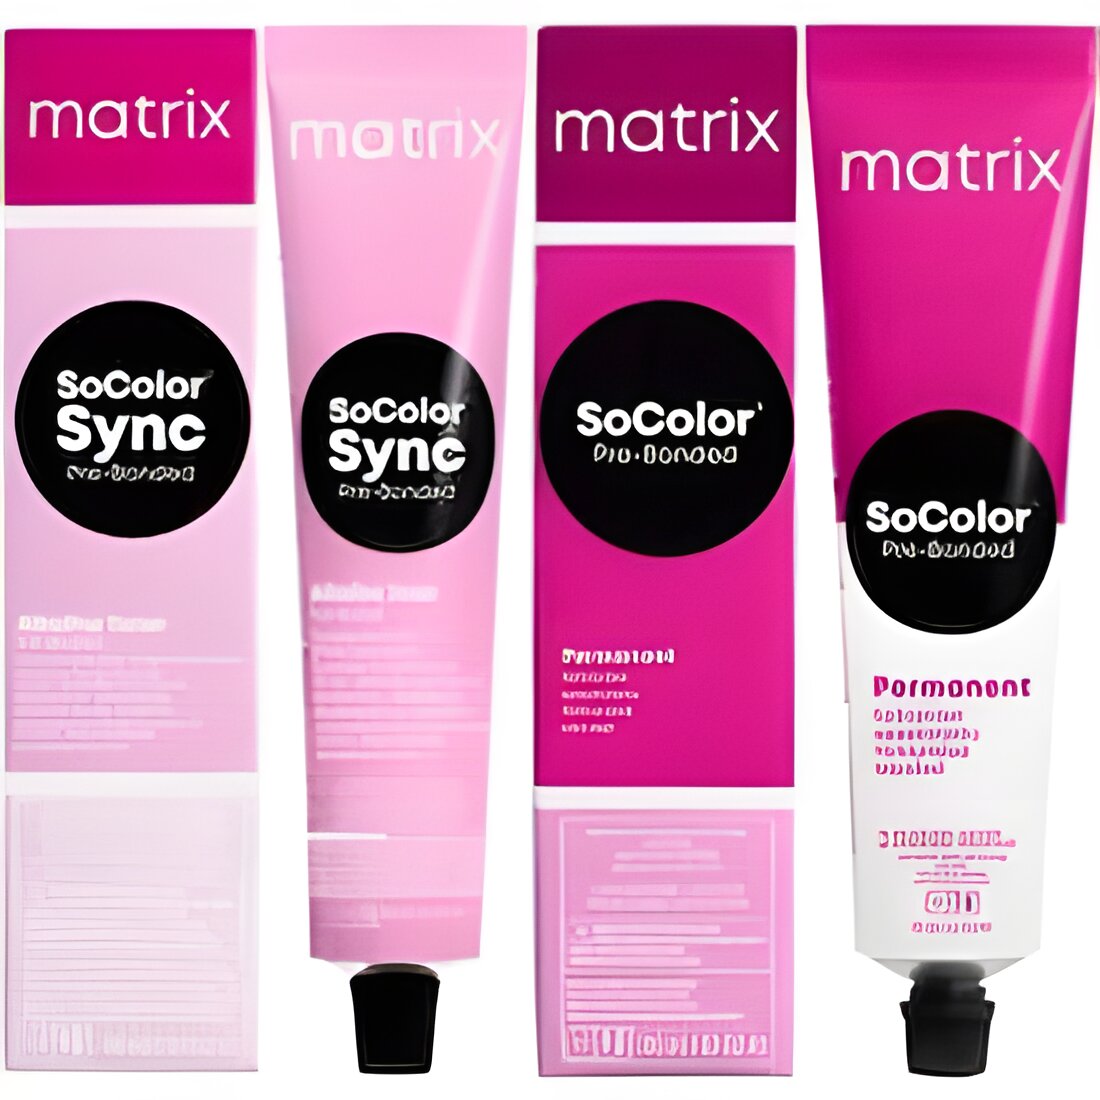 Free Matrix SoColor Pre-Bonded Permanent Hair Color